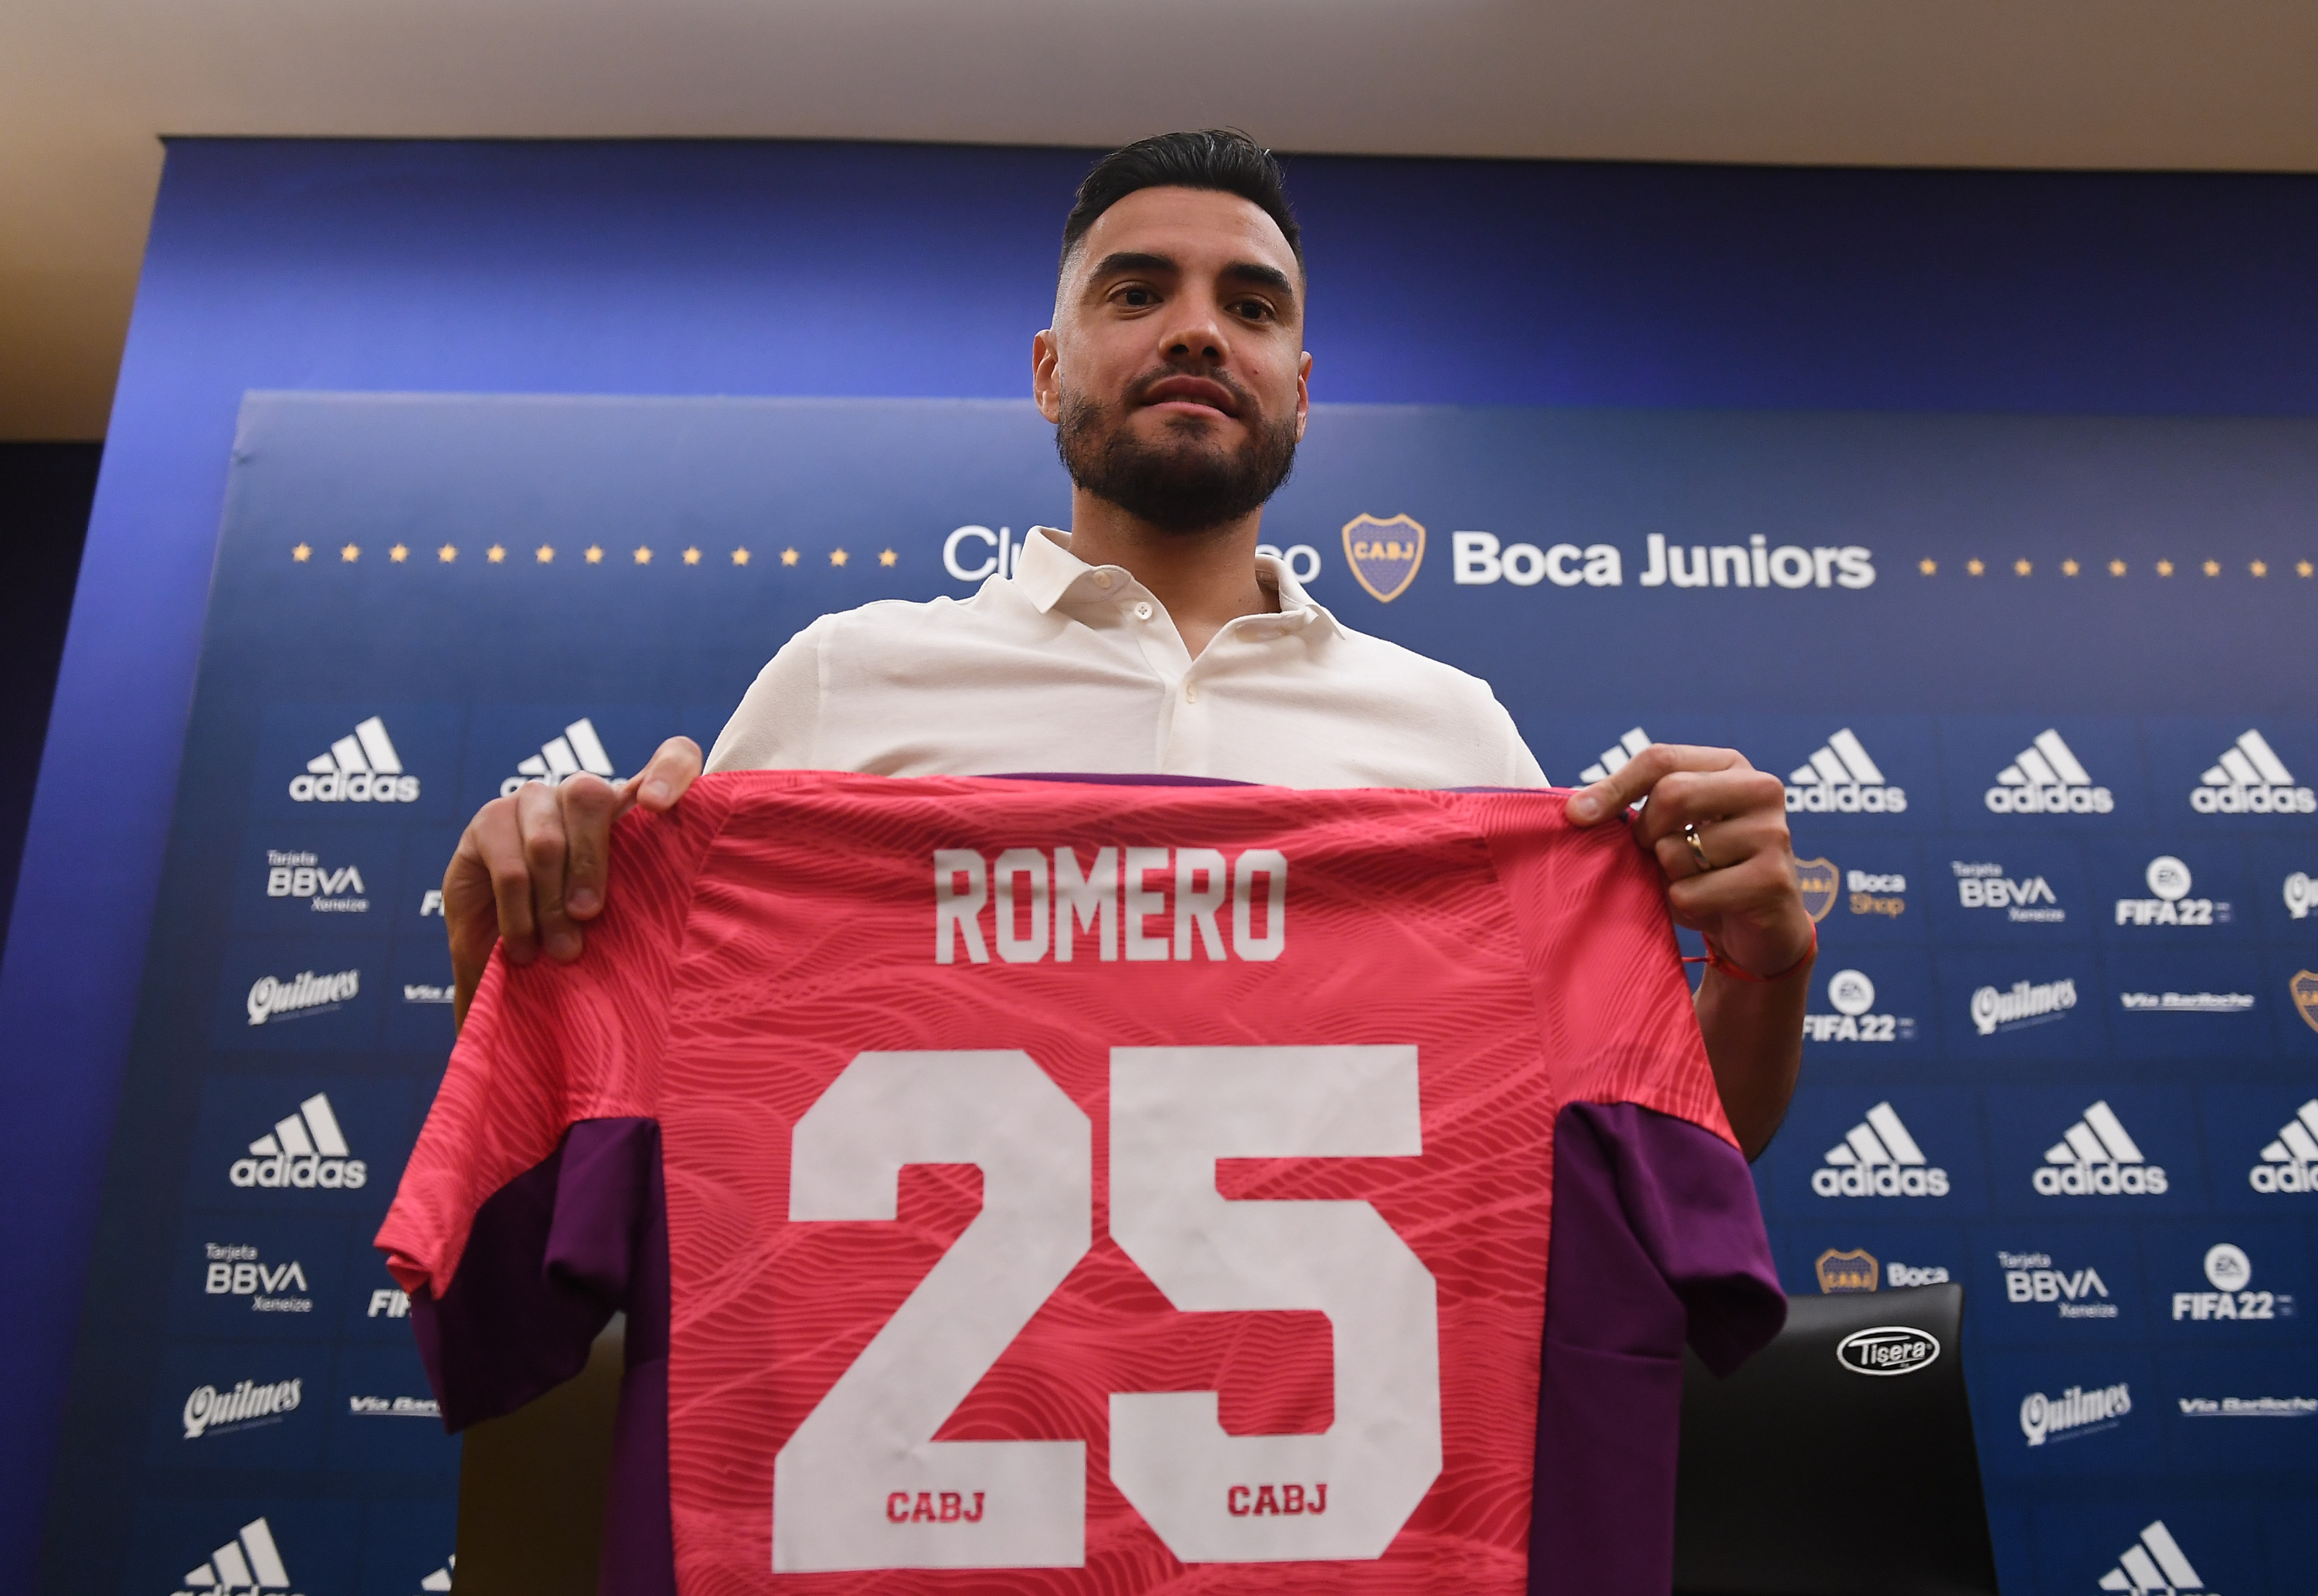 Romero's performance in Boca (Telam)